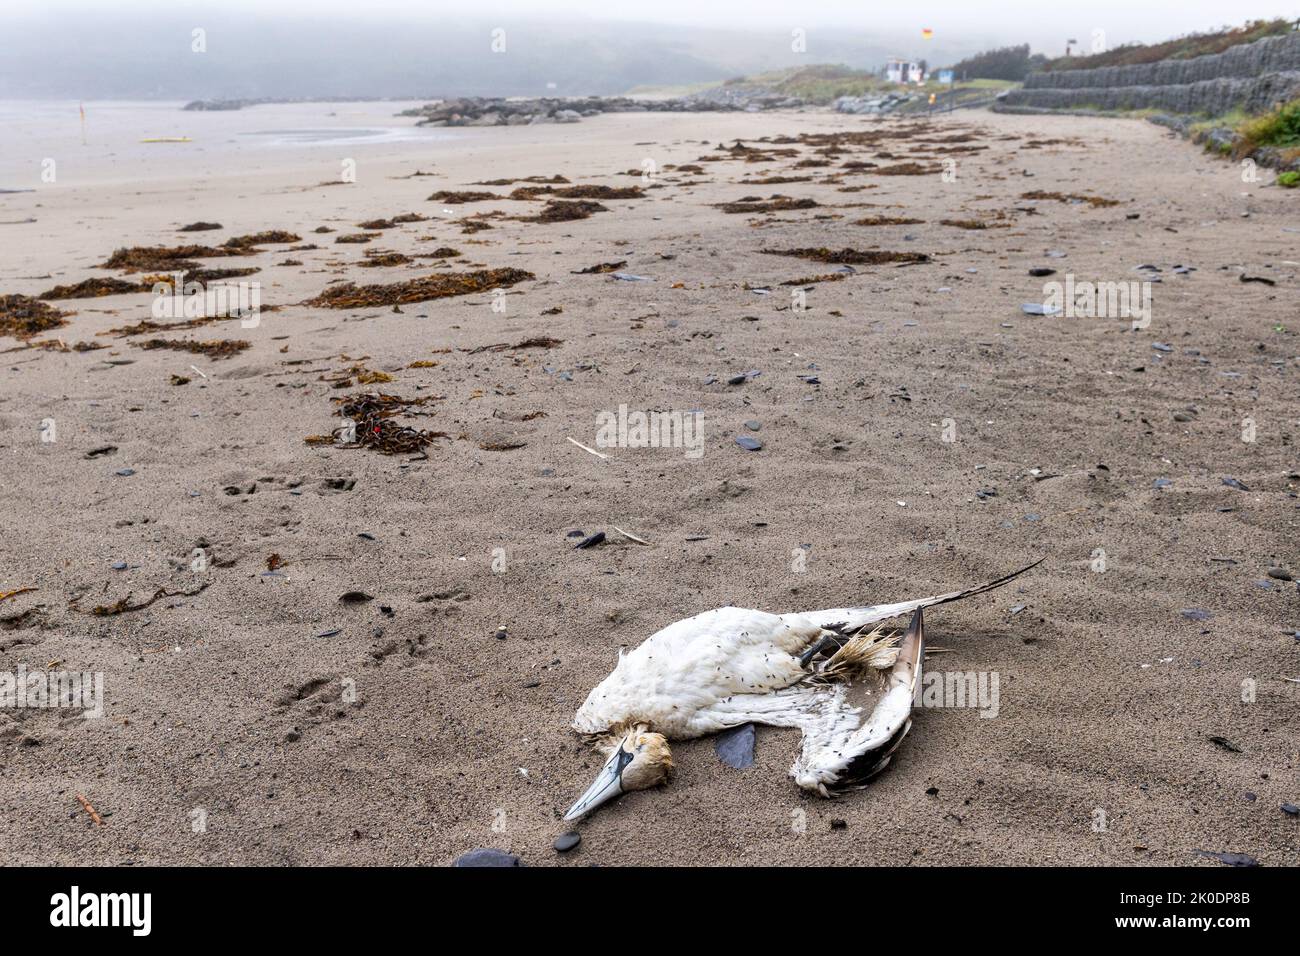 Warren Beach, Rosscarbery, West Cork, Irlanda. Dos aves muertas han sido avistadas hoy en la playa Warren Beach en West Cork, en medio del actual temor a la gripe aviar. Crédito: AG News/Alamy Live News Foto de stock